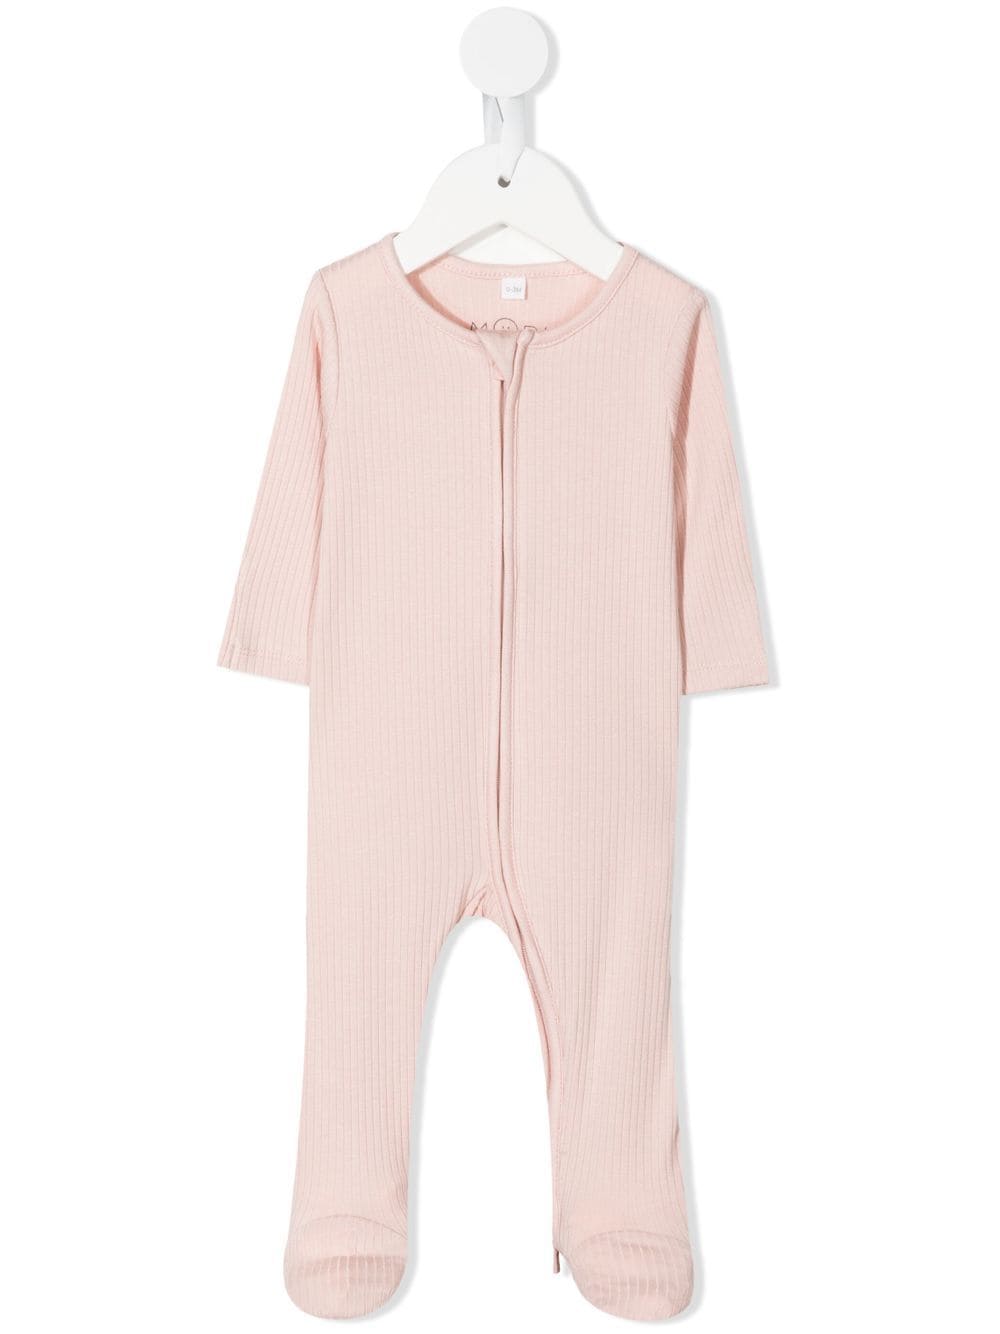 Mori Babies' Ribbed Knit Romper In Pink